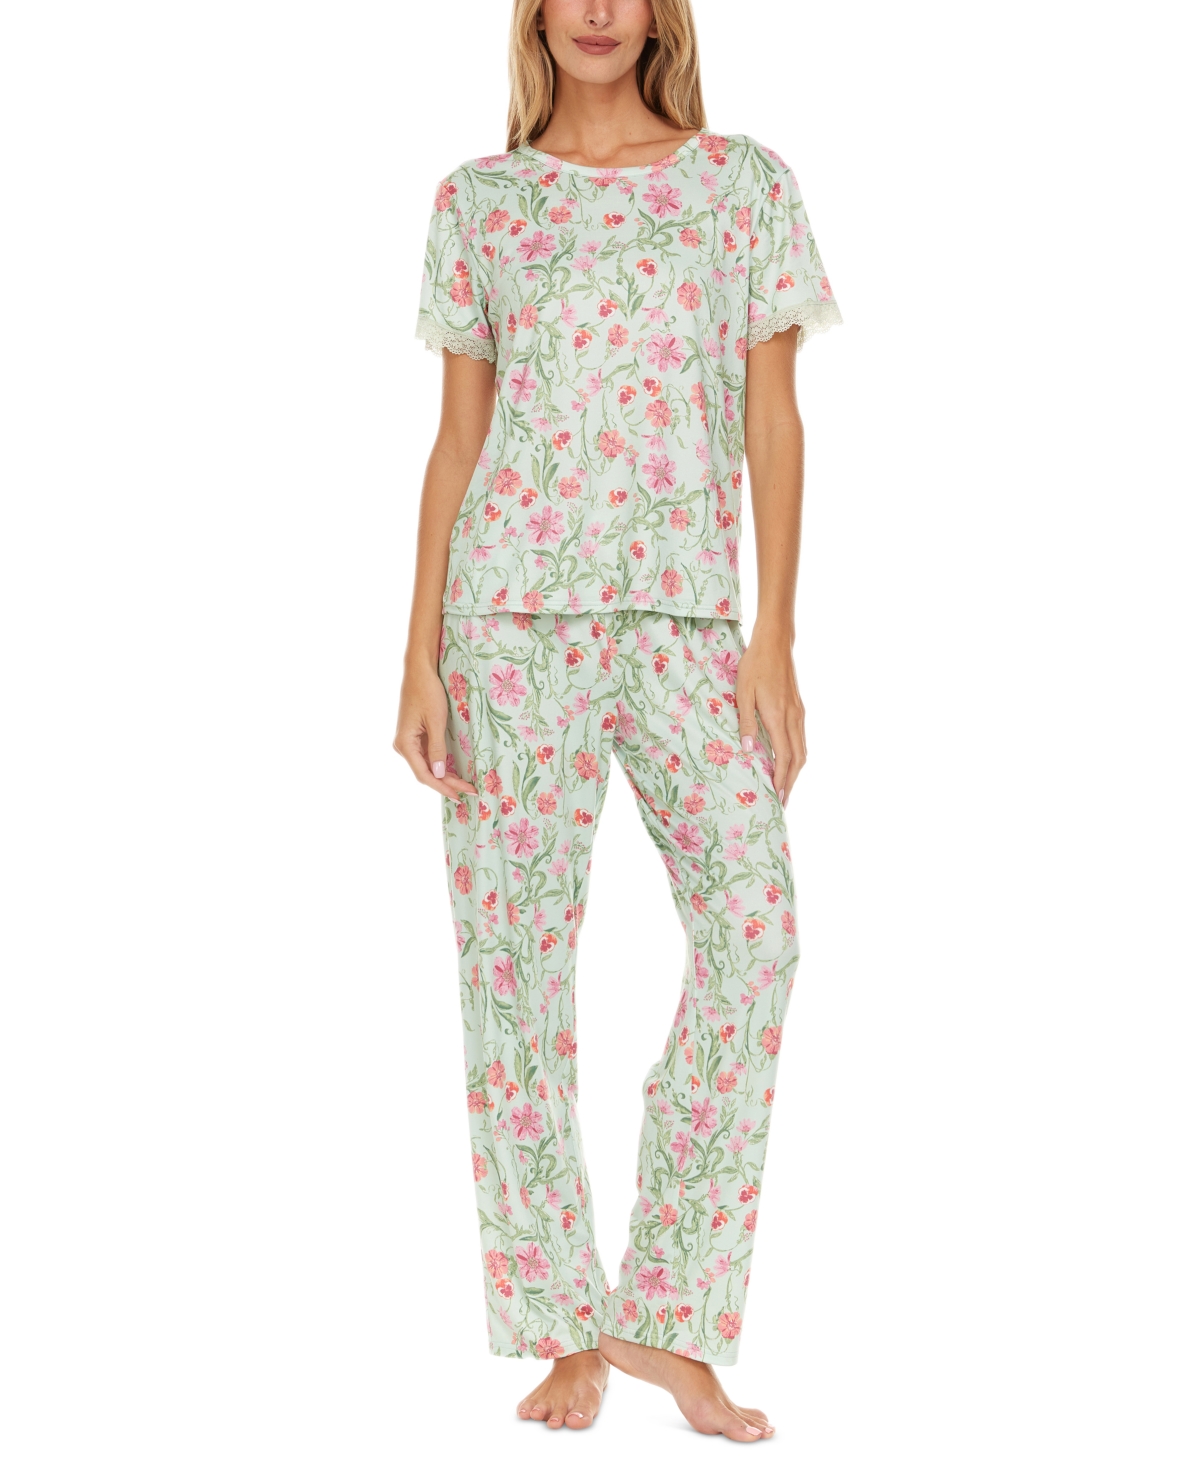 Women's 2-Pc. Jody Floral Pajamas Set - Orange